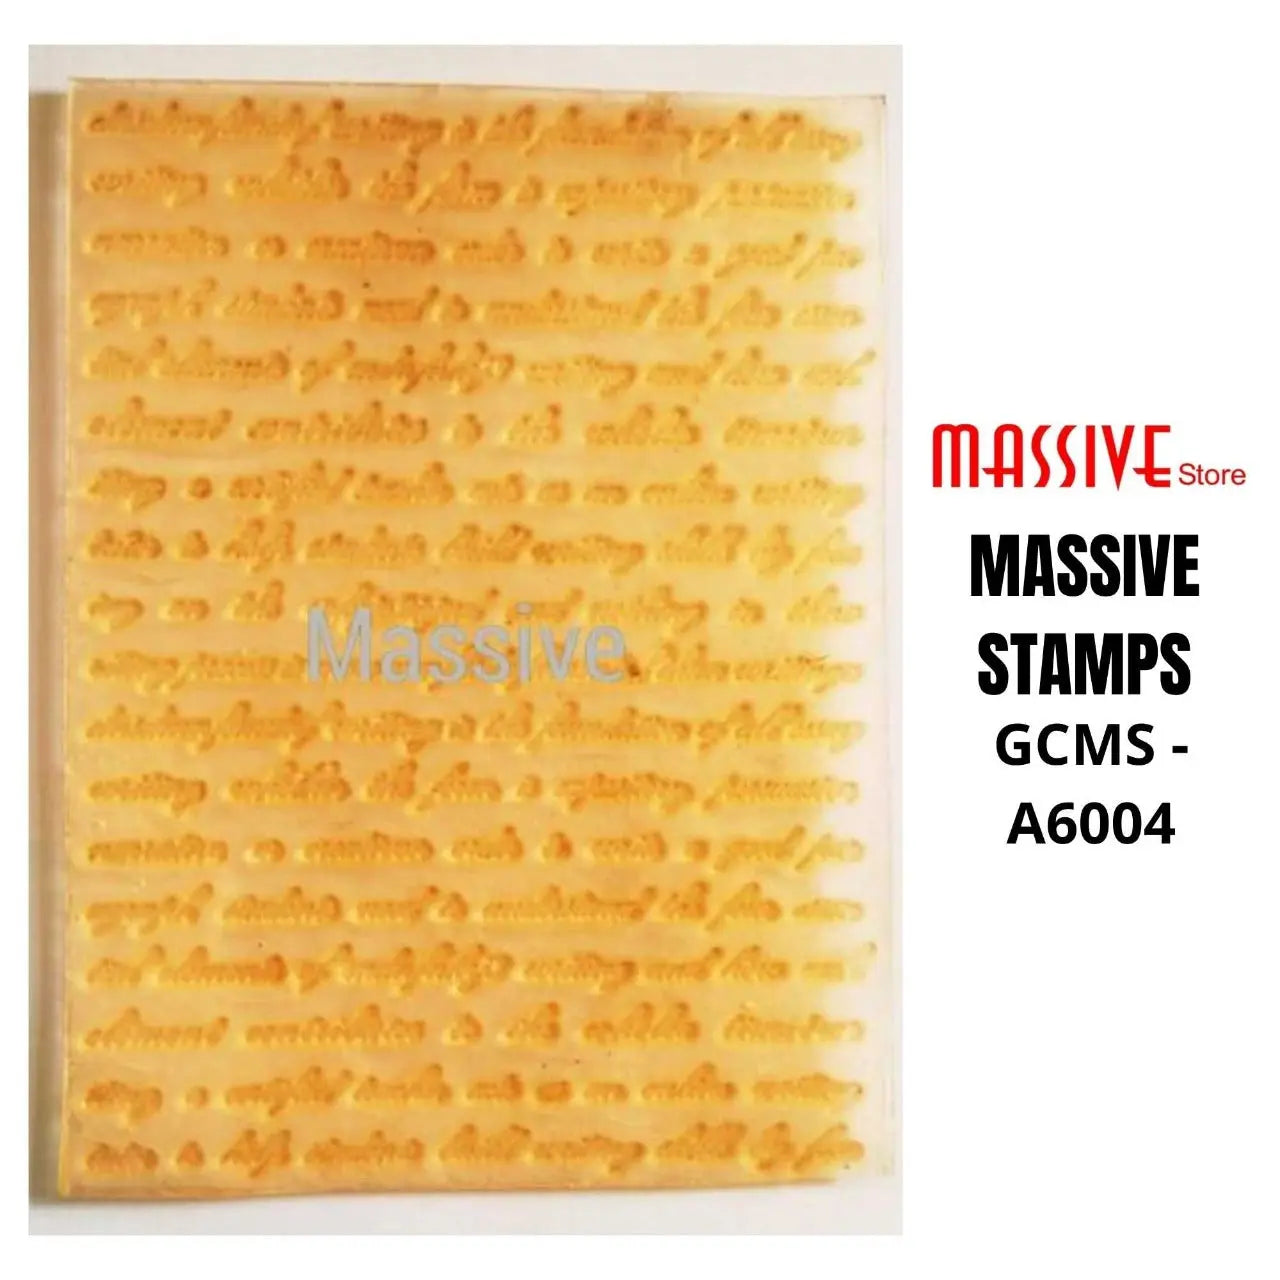 Customized Script Stamp (GCMS A6004) Massive